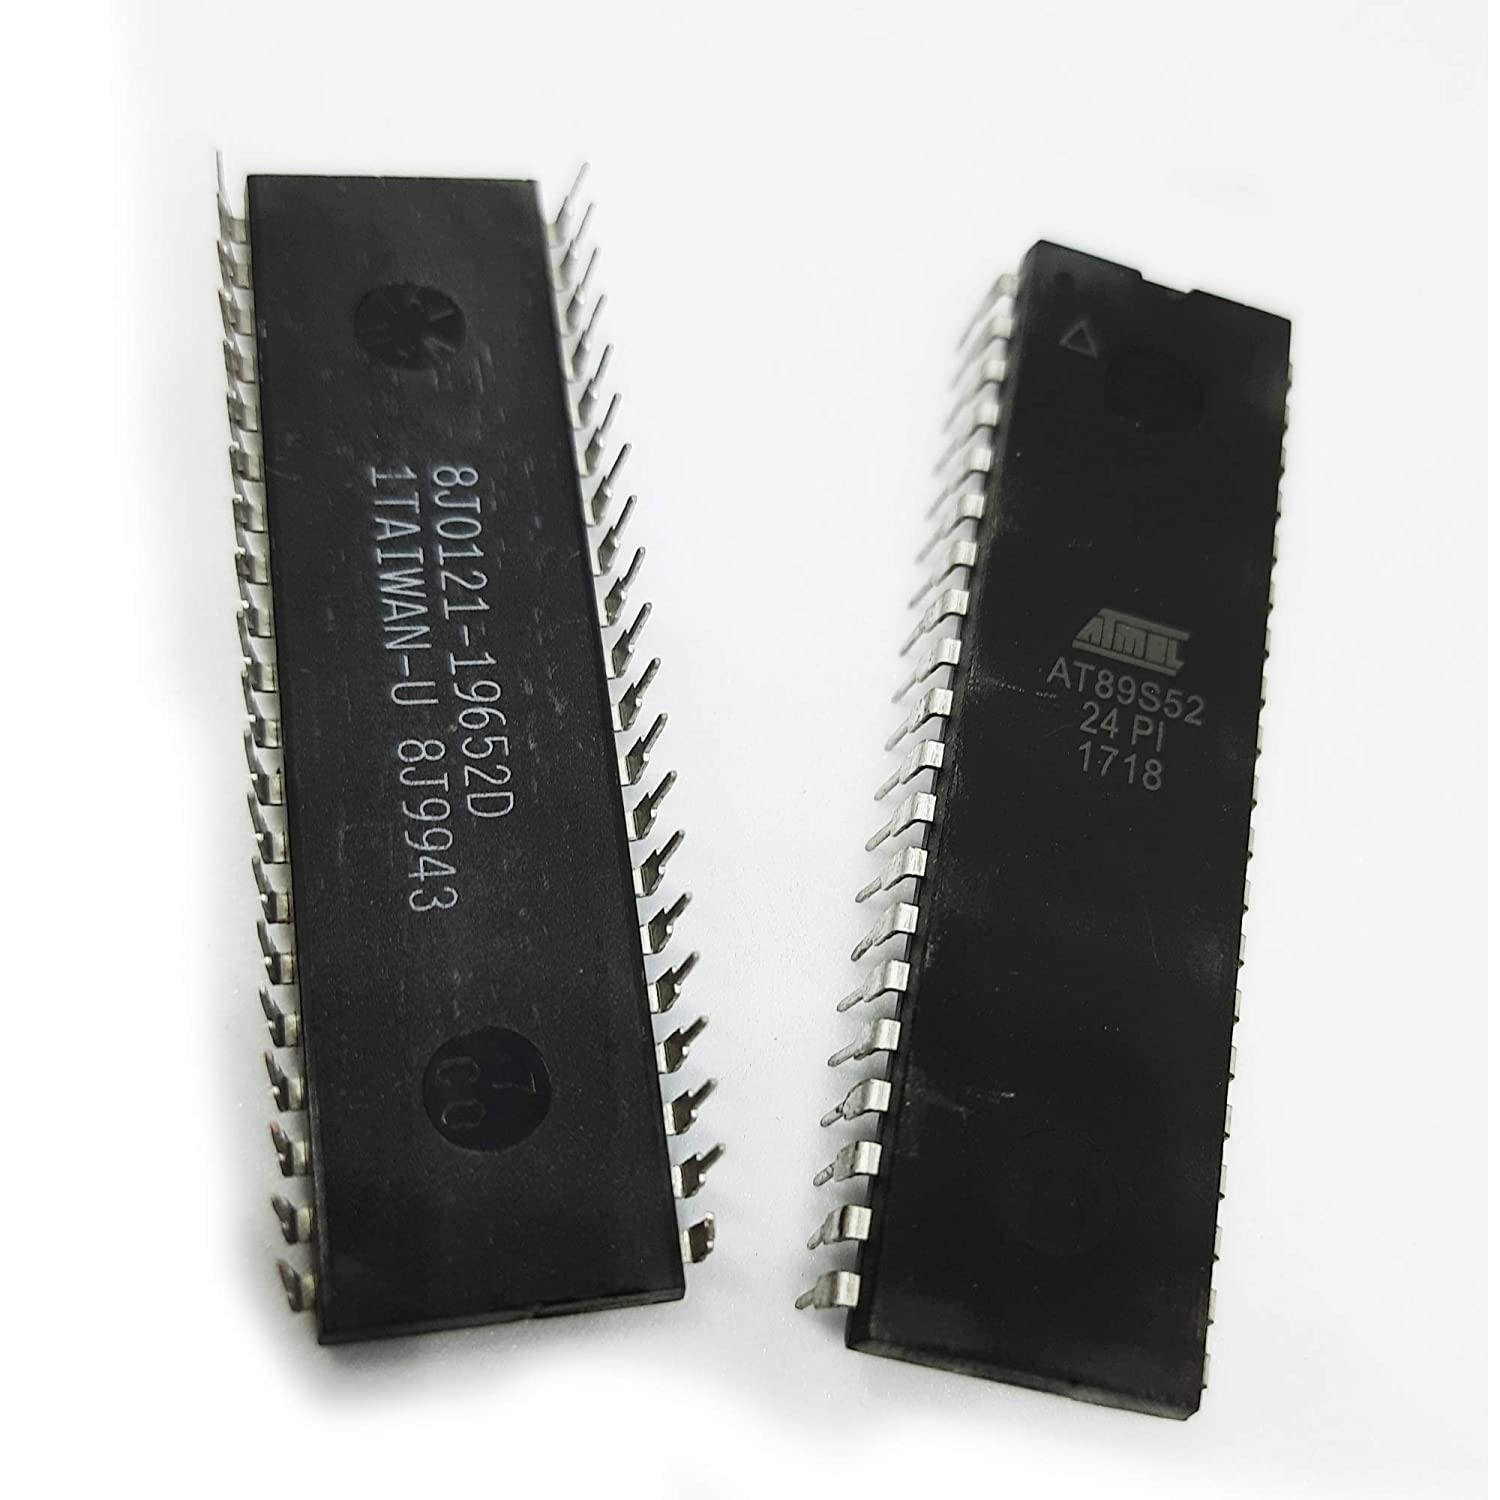 AT 89S52 IC ATMEL 8051 Microcontroller 40 Pin DIP